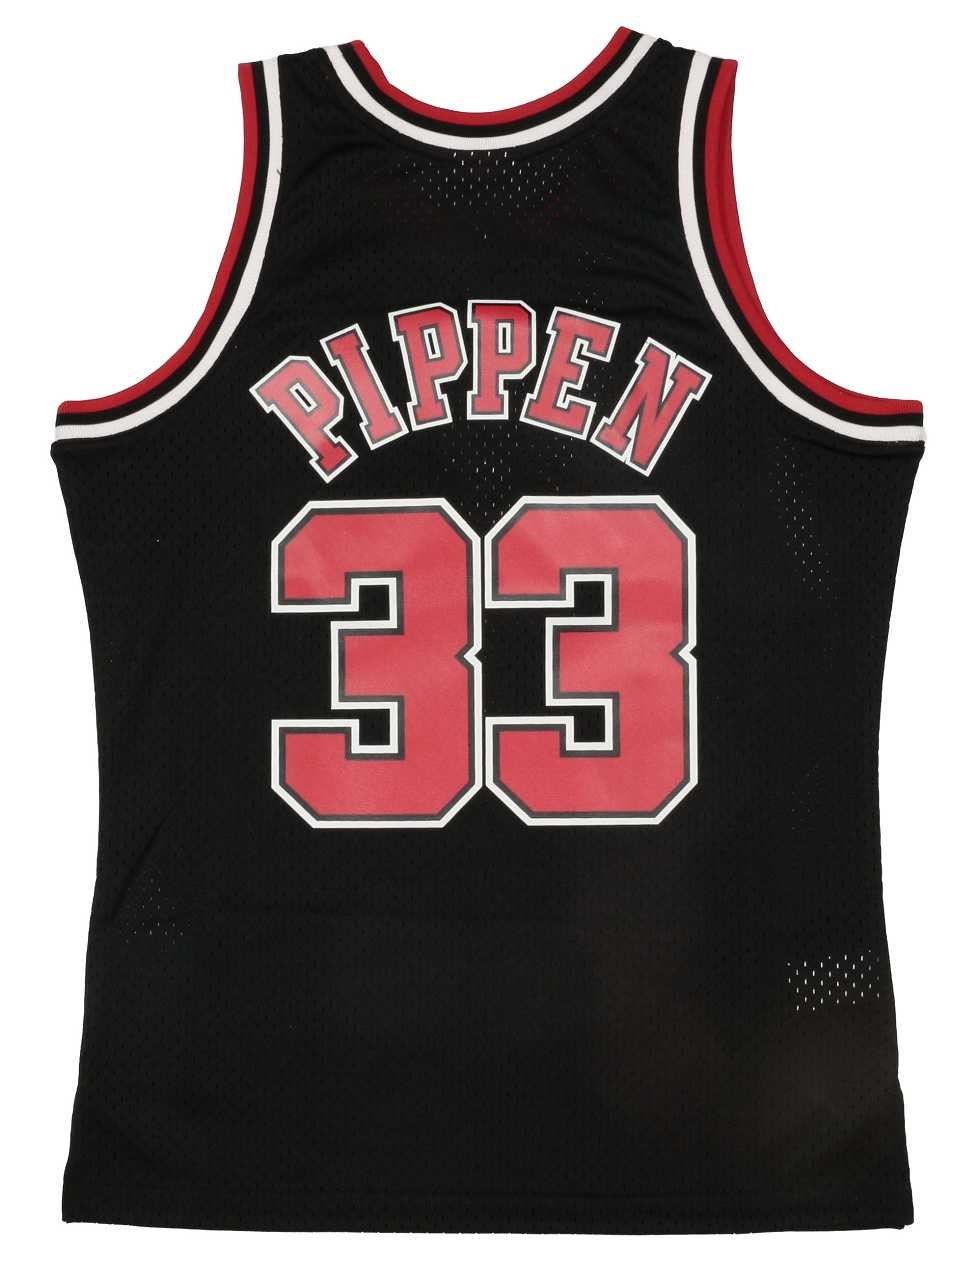 Scottie Pippen #33 Chicago Bulls NBA Swingman Mitchell & Ness